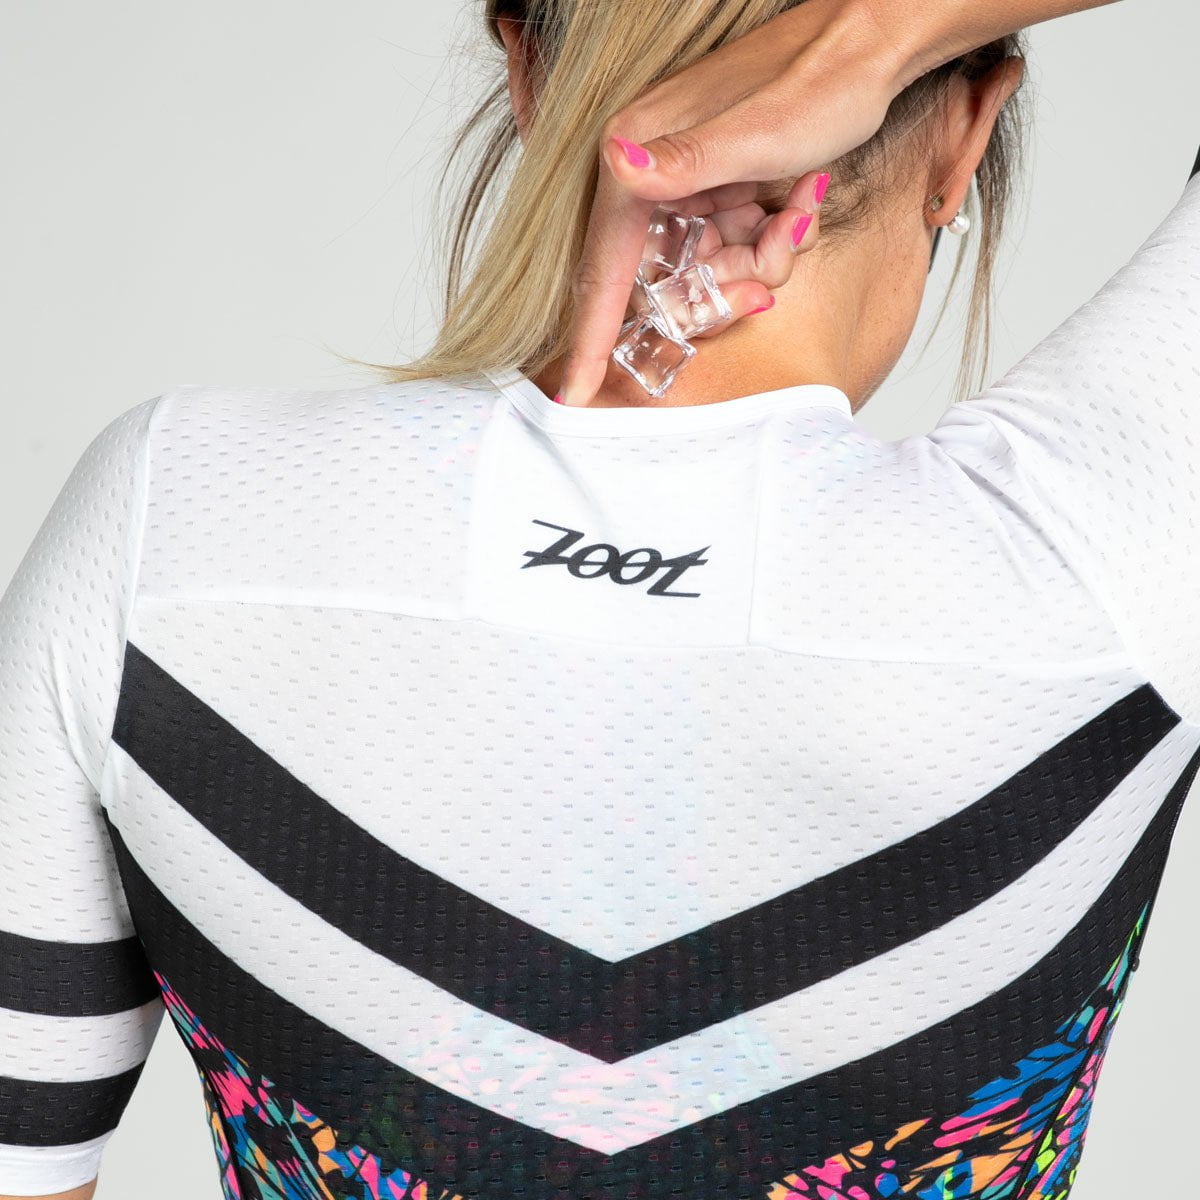 Zoot Sports TRI RACESUITS Women's Ltd Tri Aero Fz Racesuit - Mariposa